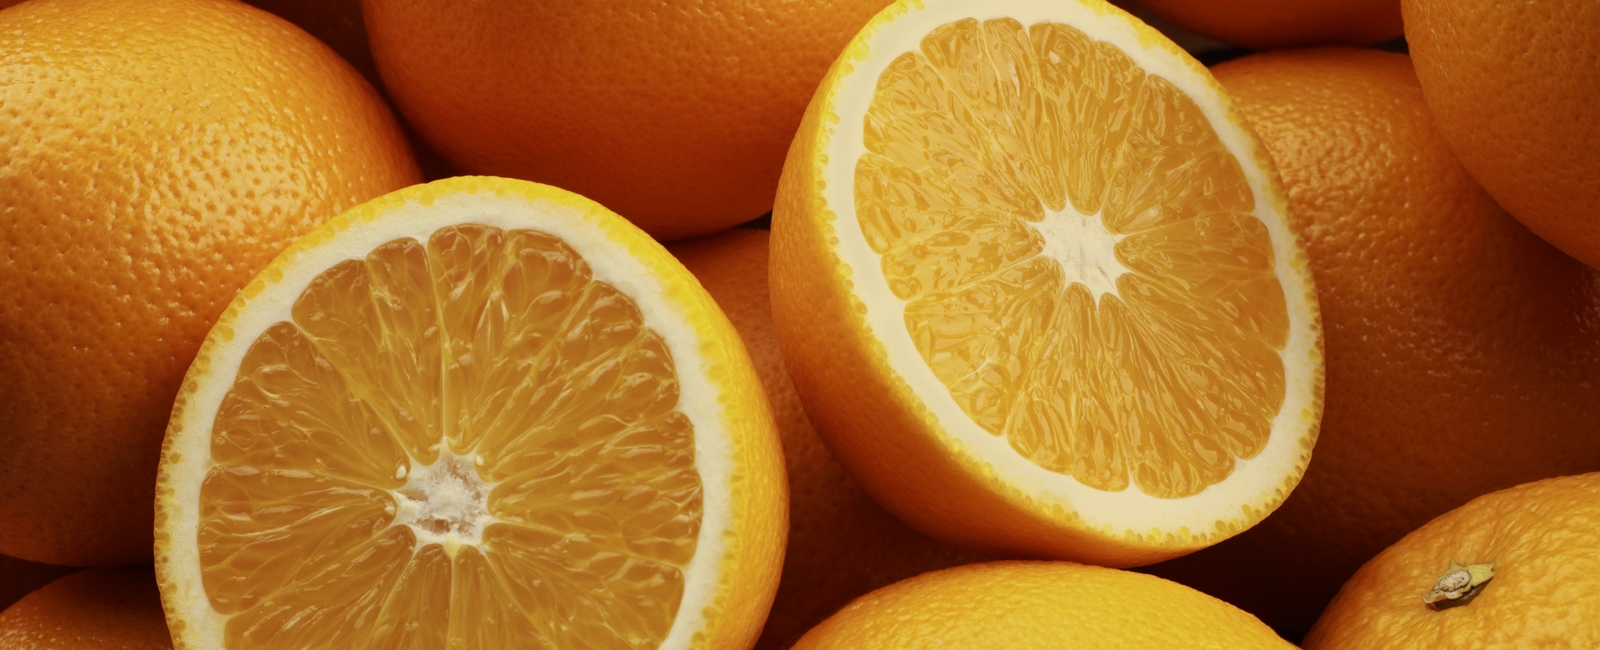 Role of Potassium in Citrus Production